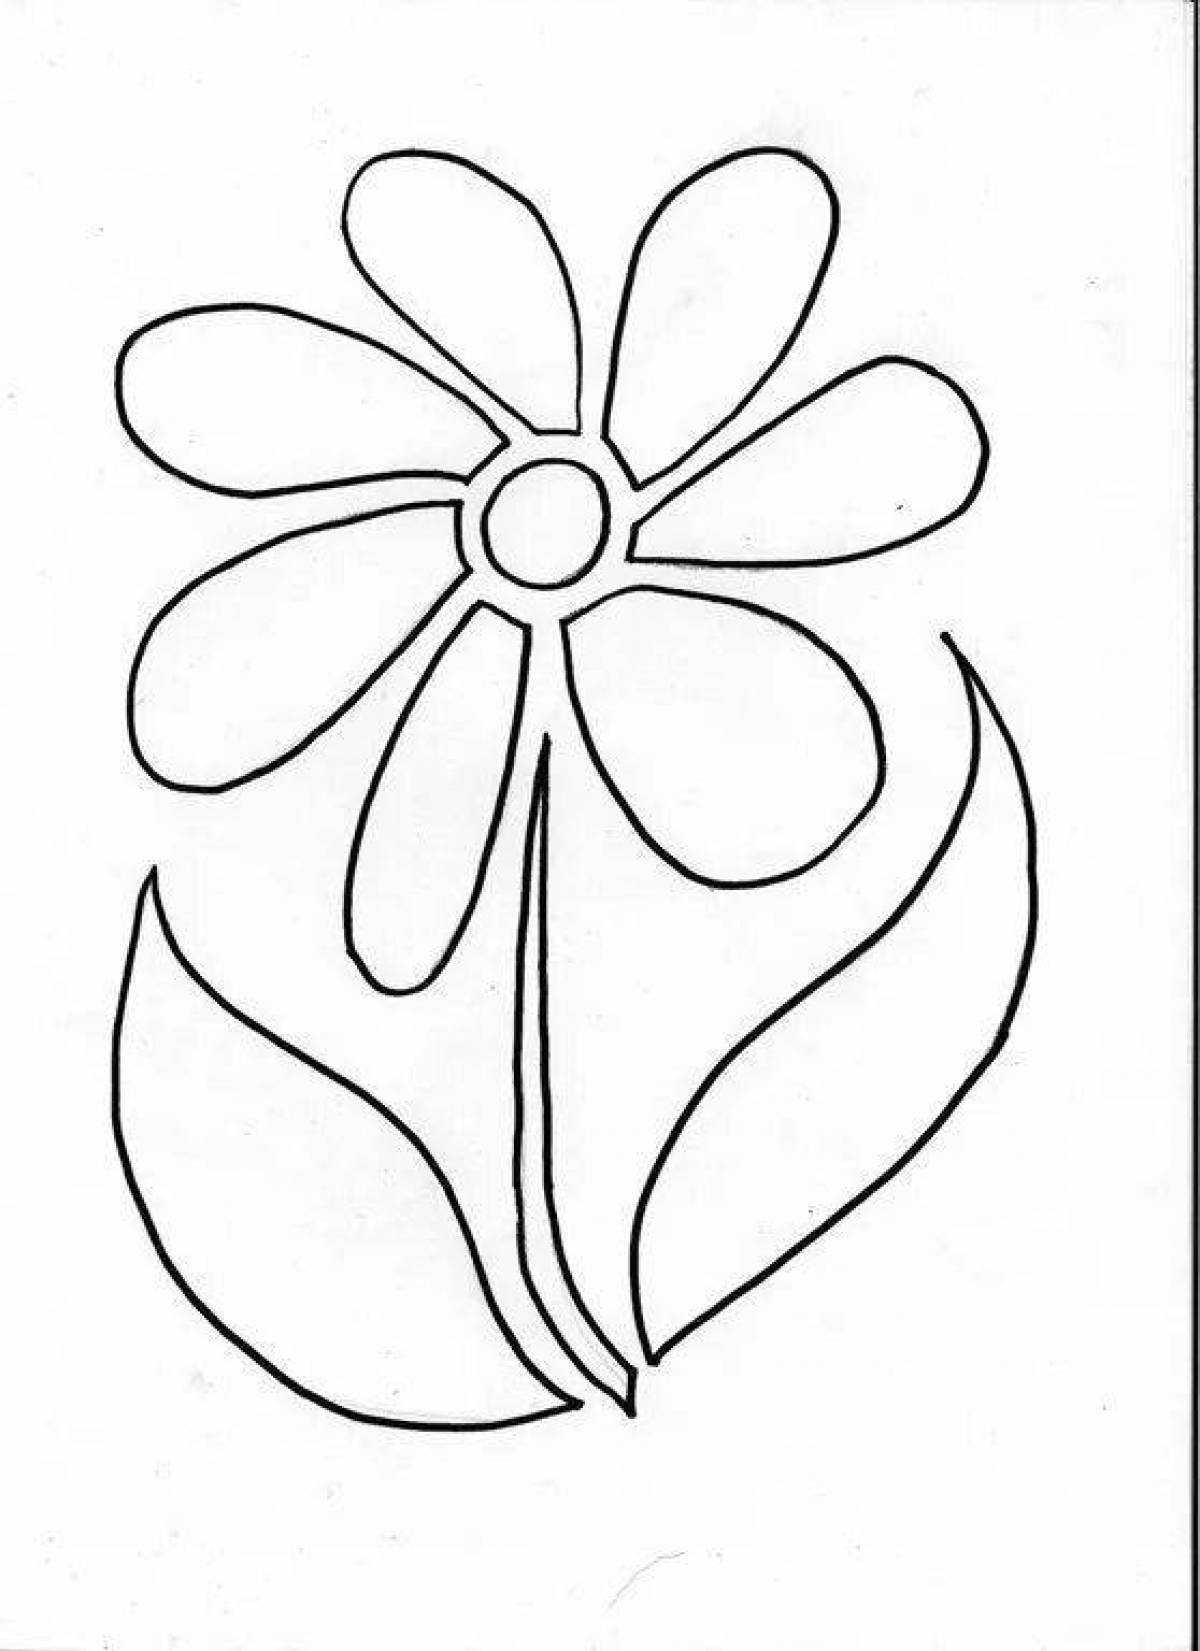 Splendorous coloring page flower seven-flower template